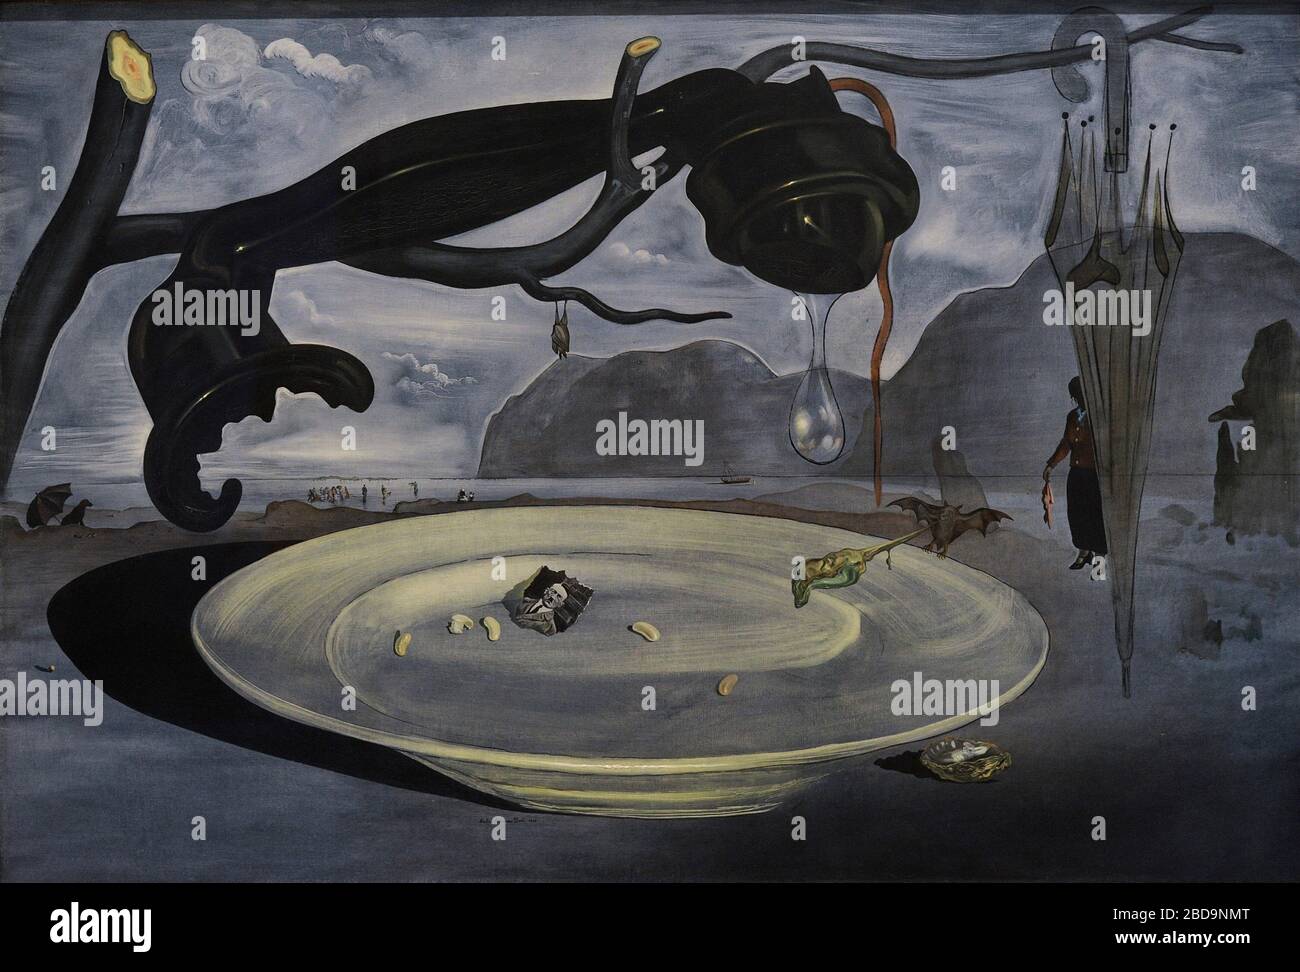 Salvador Dalí (1904-1989). Pintor surrealista español. El enigma de Hitler, 1939. Óleo sobre lienzo, 95 x 141 cm. Museo Nacional Centro de Arte Reina Sofía. Madrid. España. Stock Photo